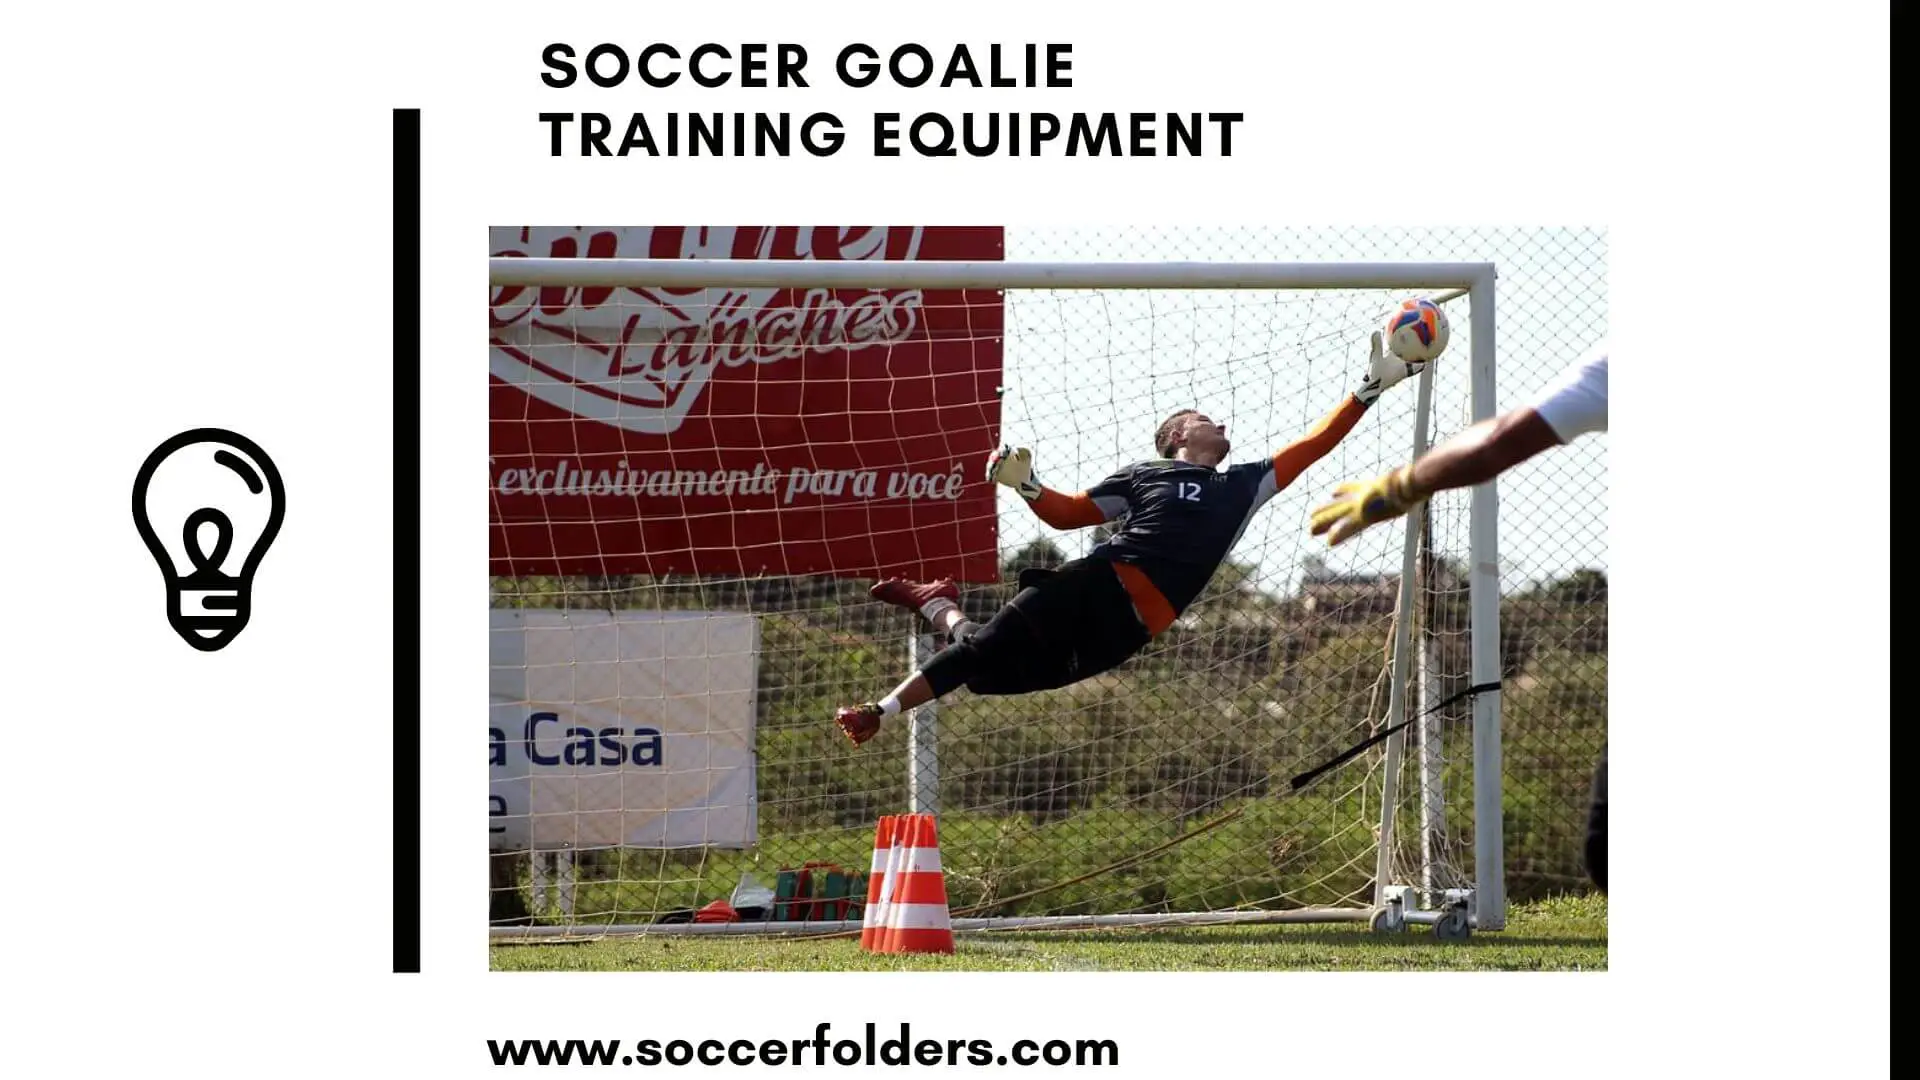 Soccer goalie training equipment - Featured image